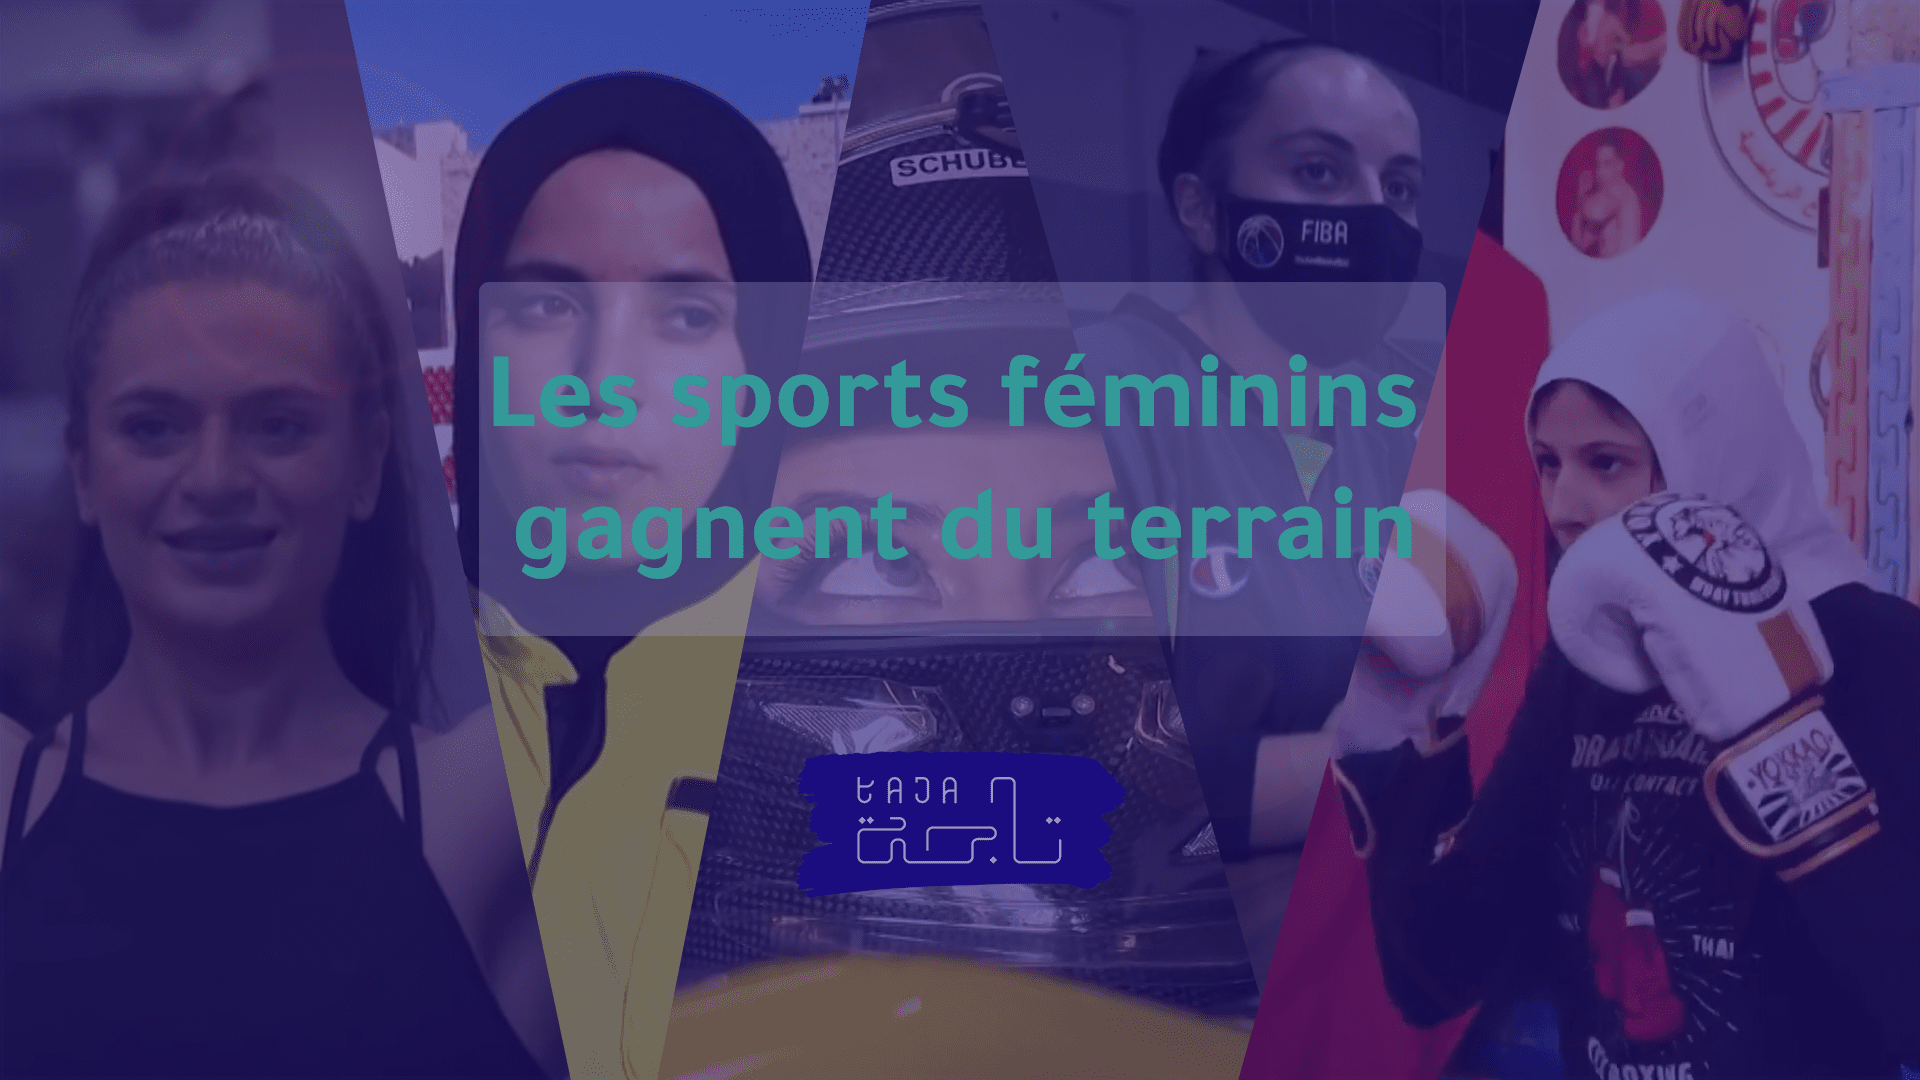 La Journée internationale du sport féminin